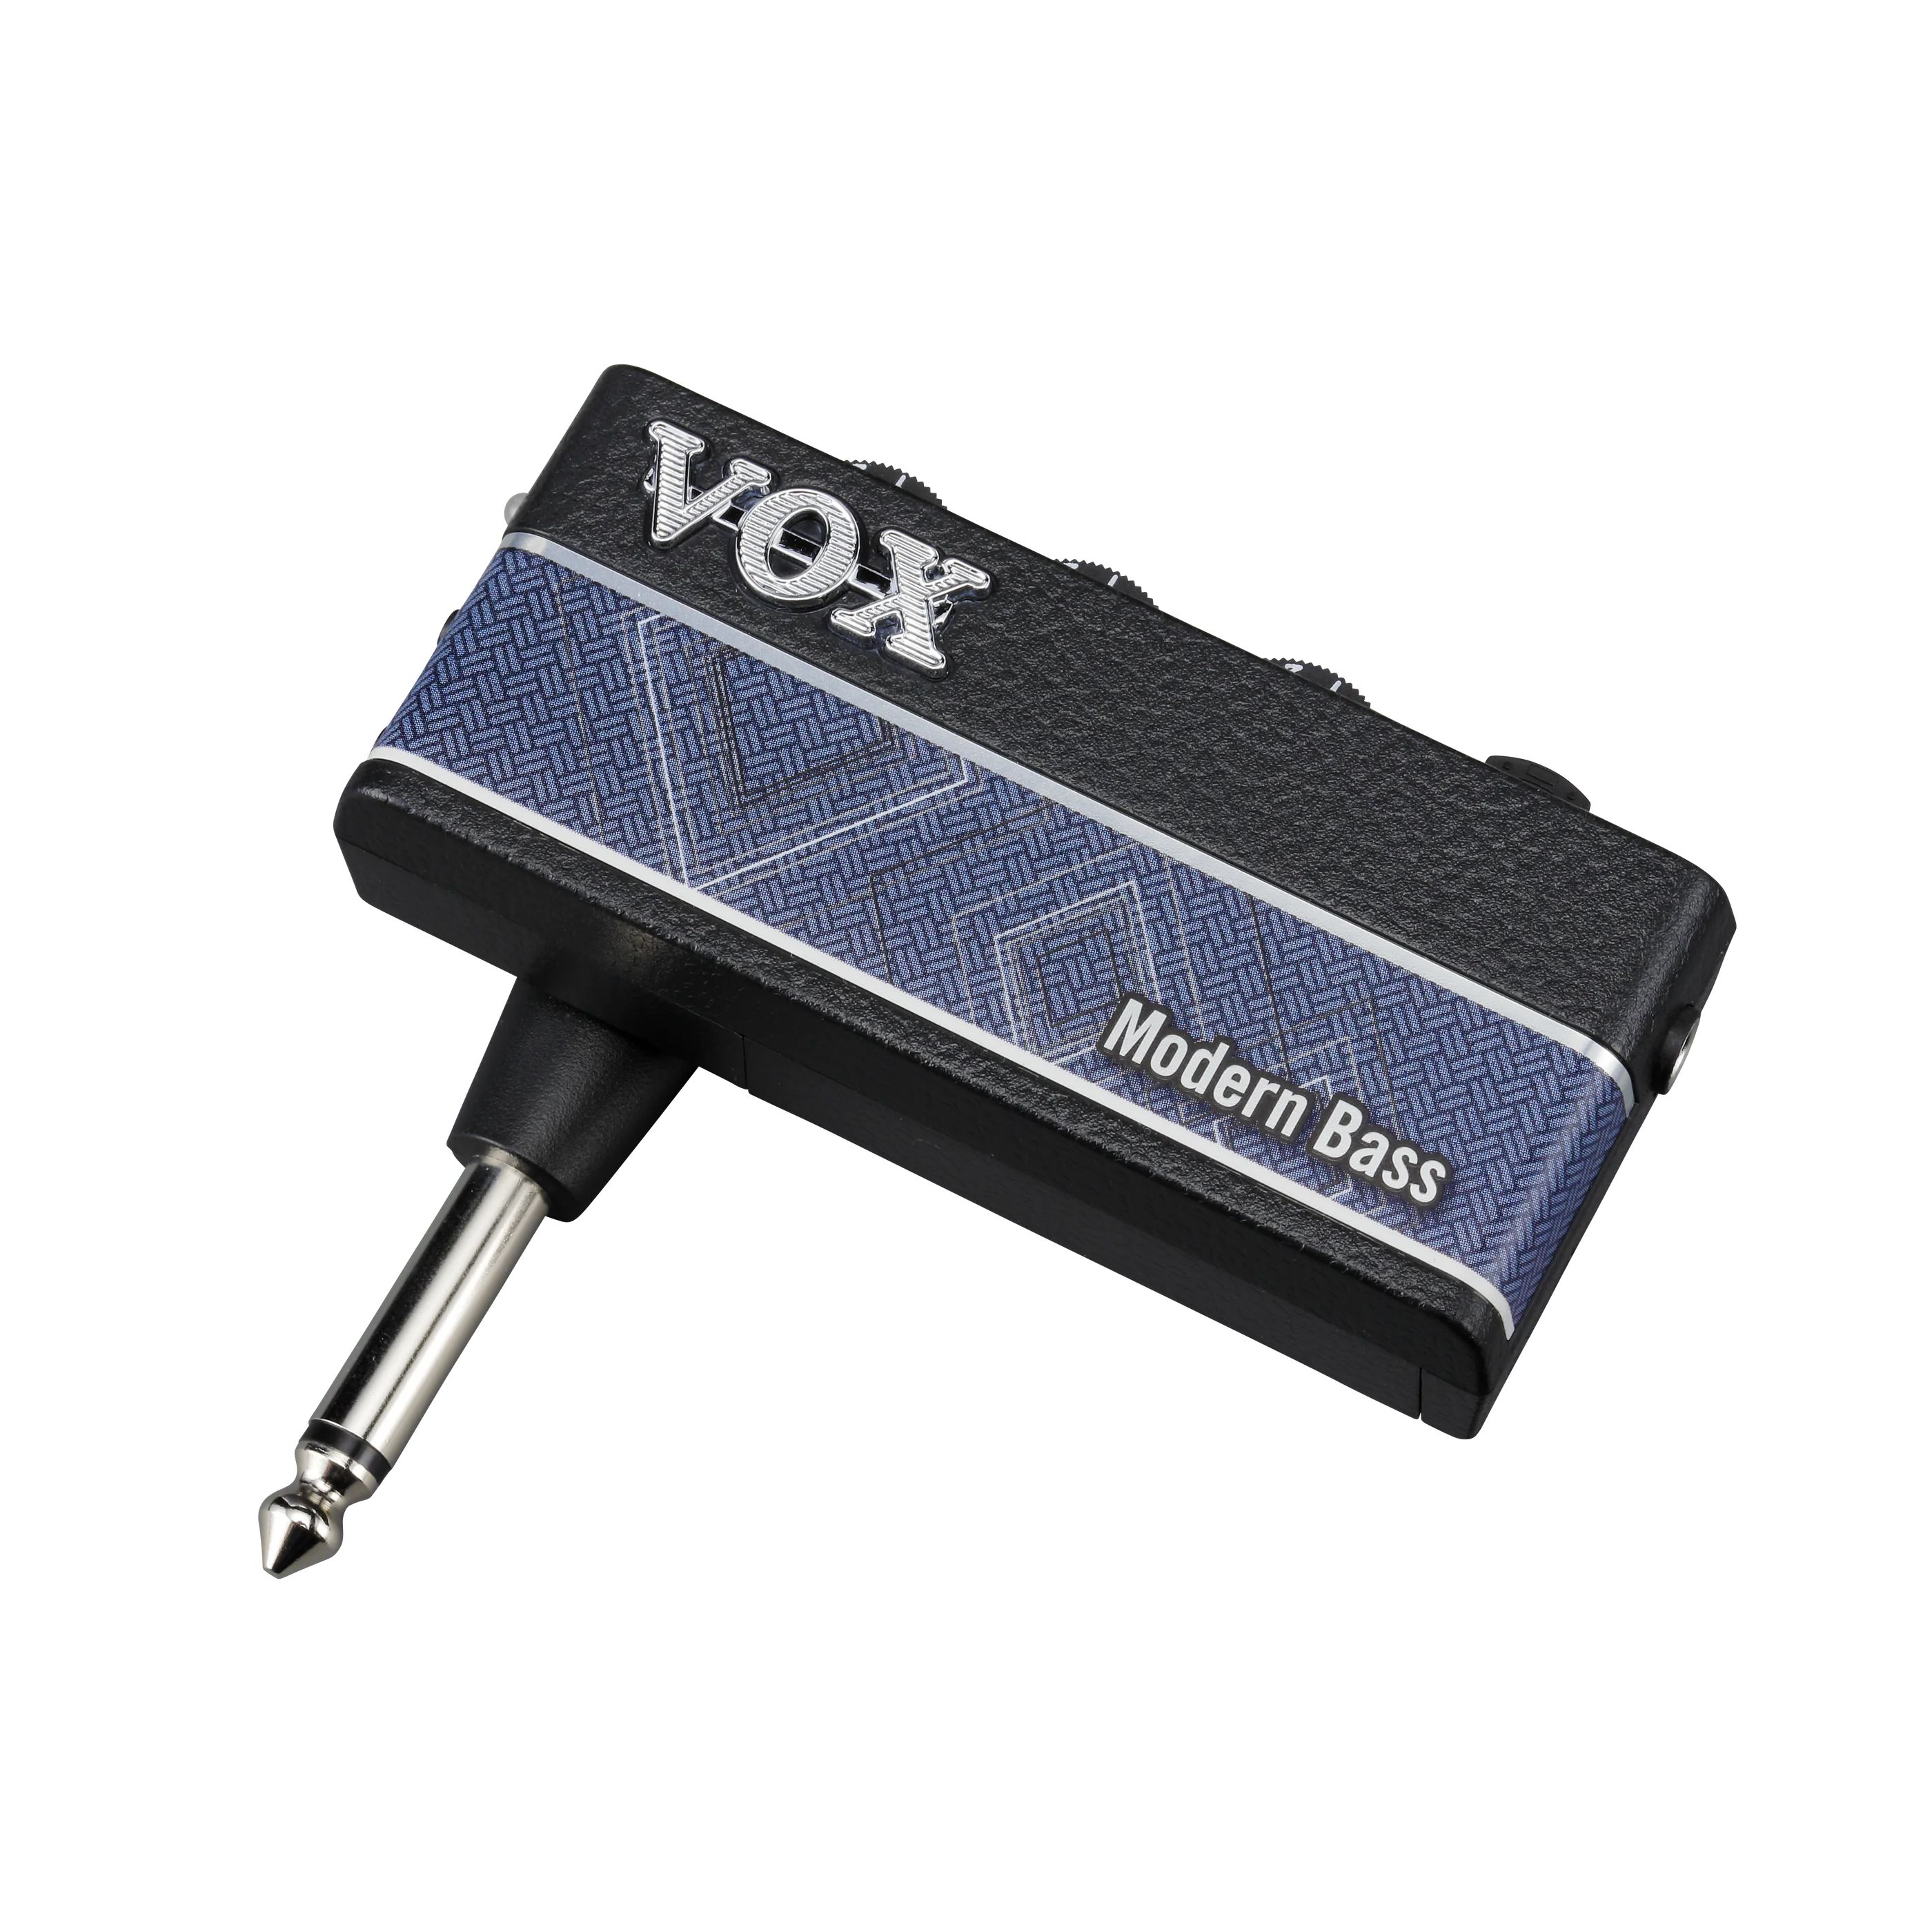 Vox AP3-MB amPlug 3 Modern Bass по цене 5 700 ₽